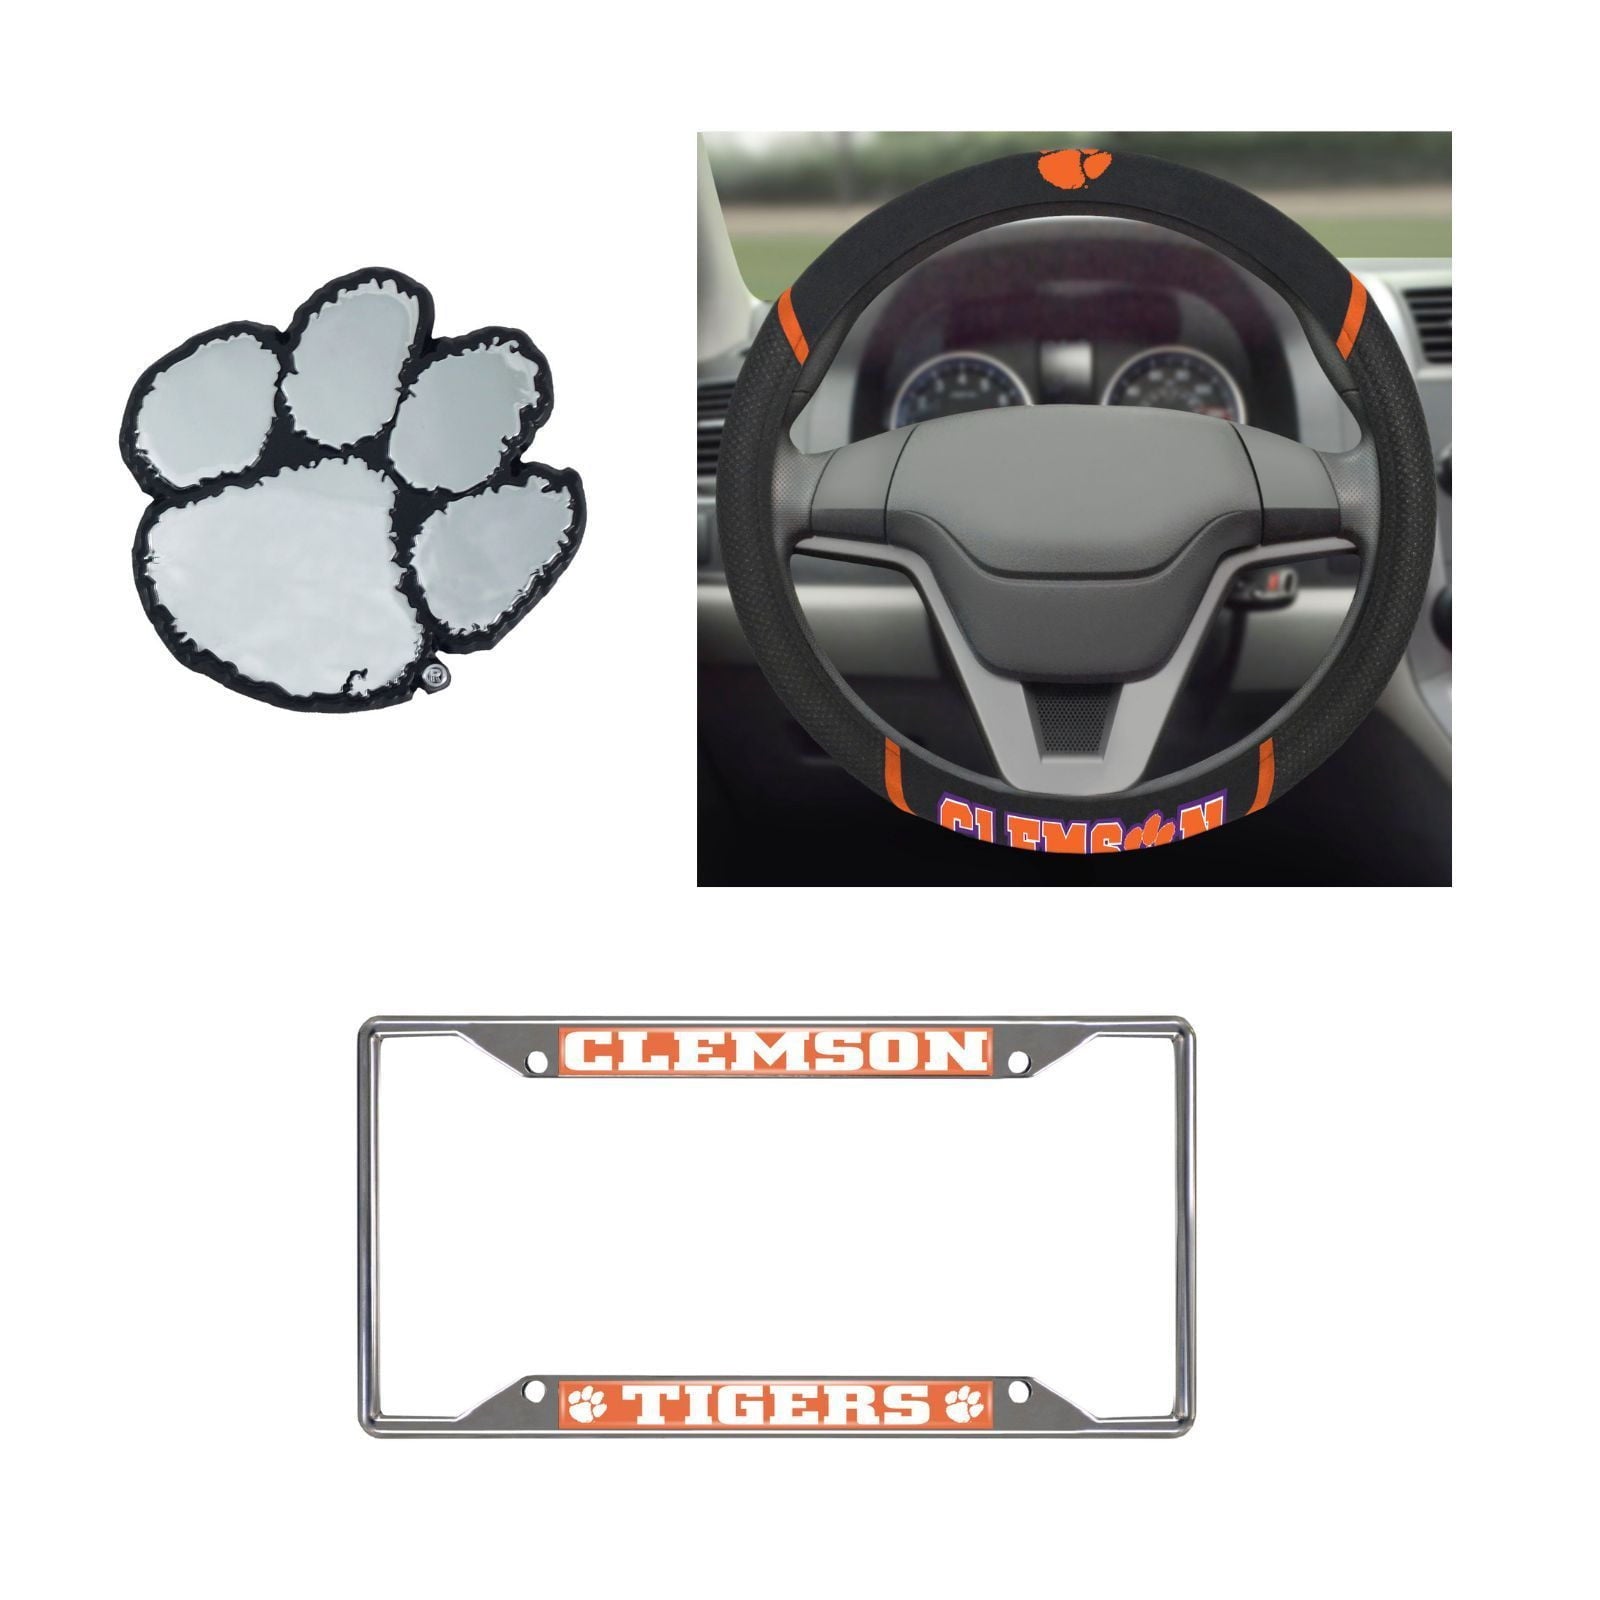 Clemson Tigers Steering Wheel Cover, License Plate Frame, 3D Chrome Emblem